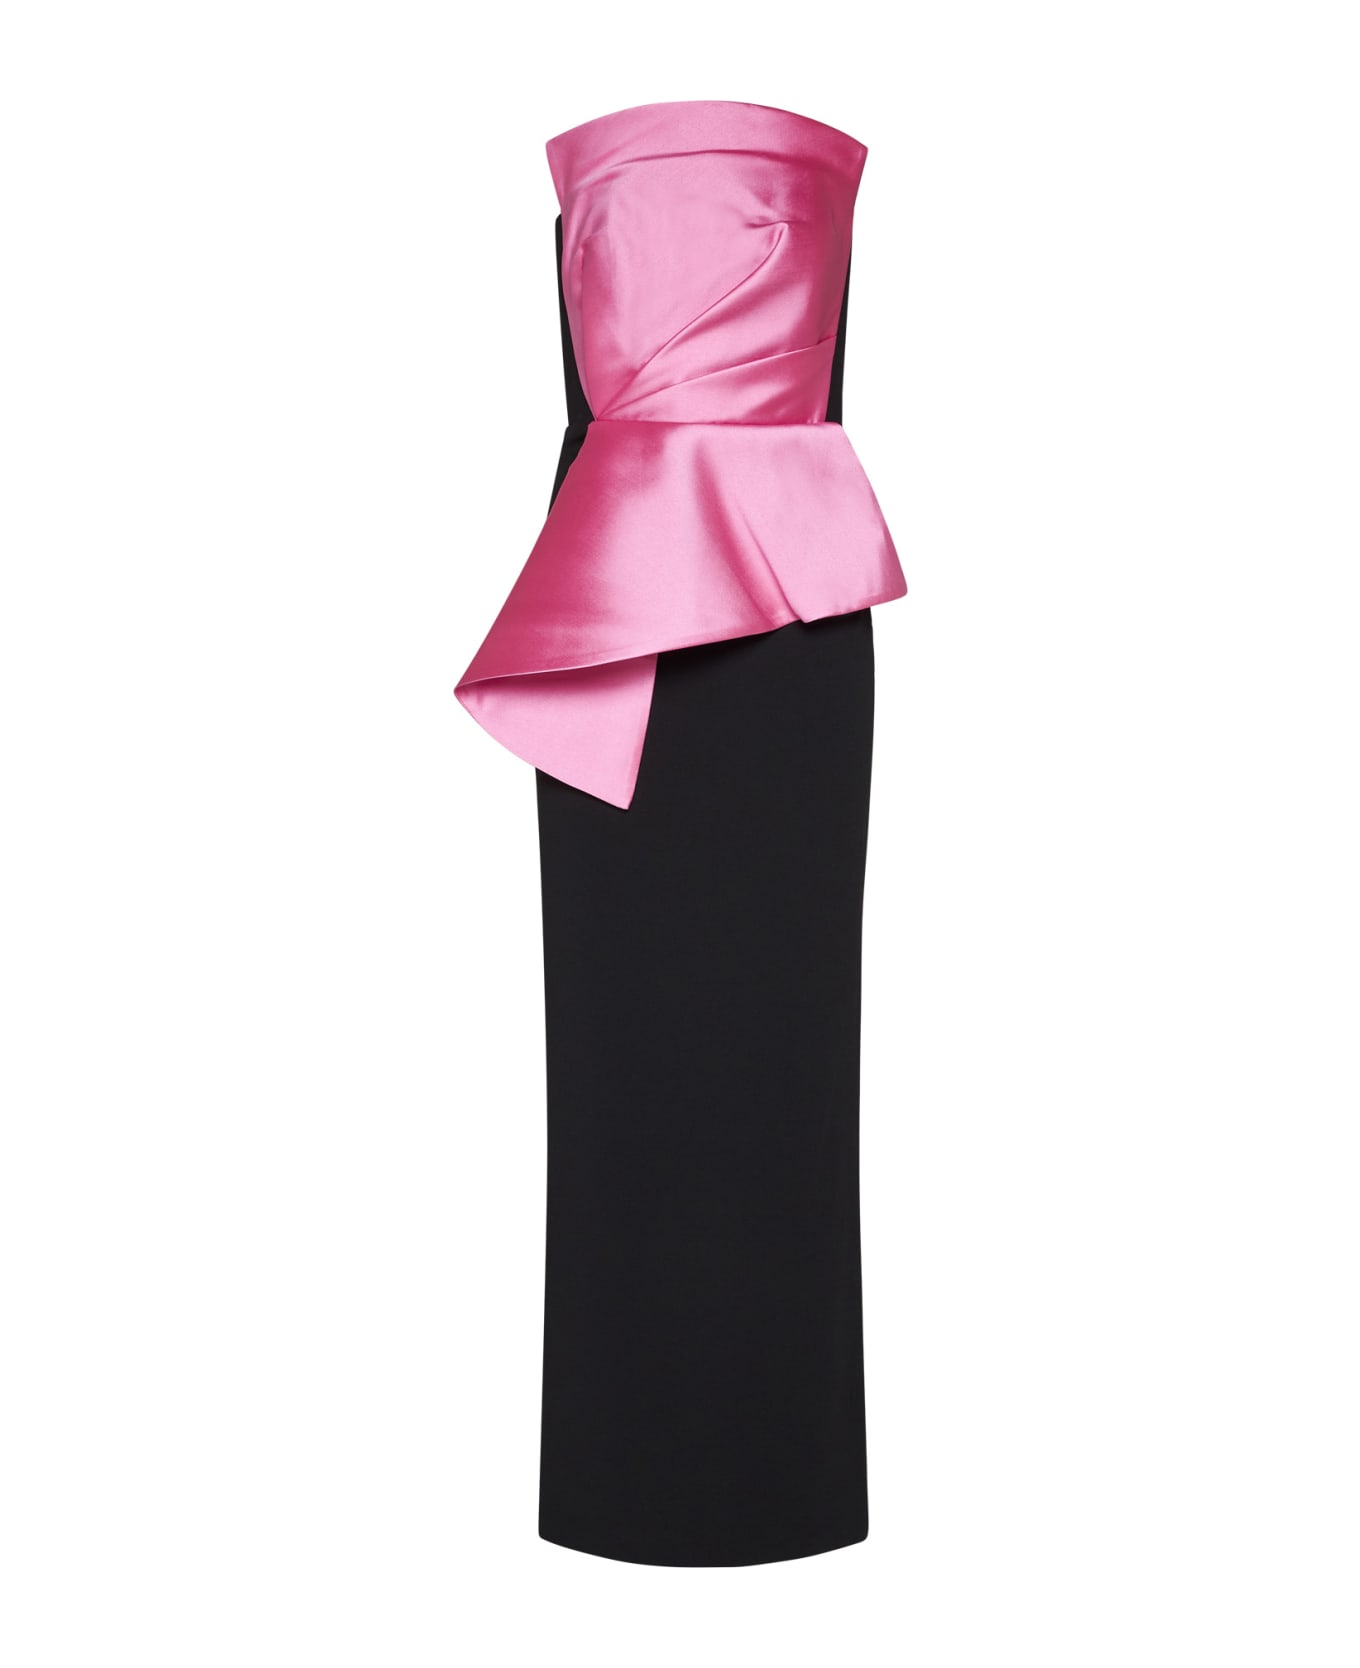 Solace London Dress - Rose pink/black